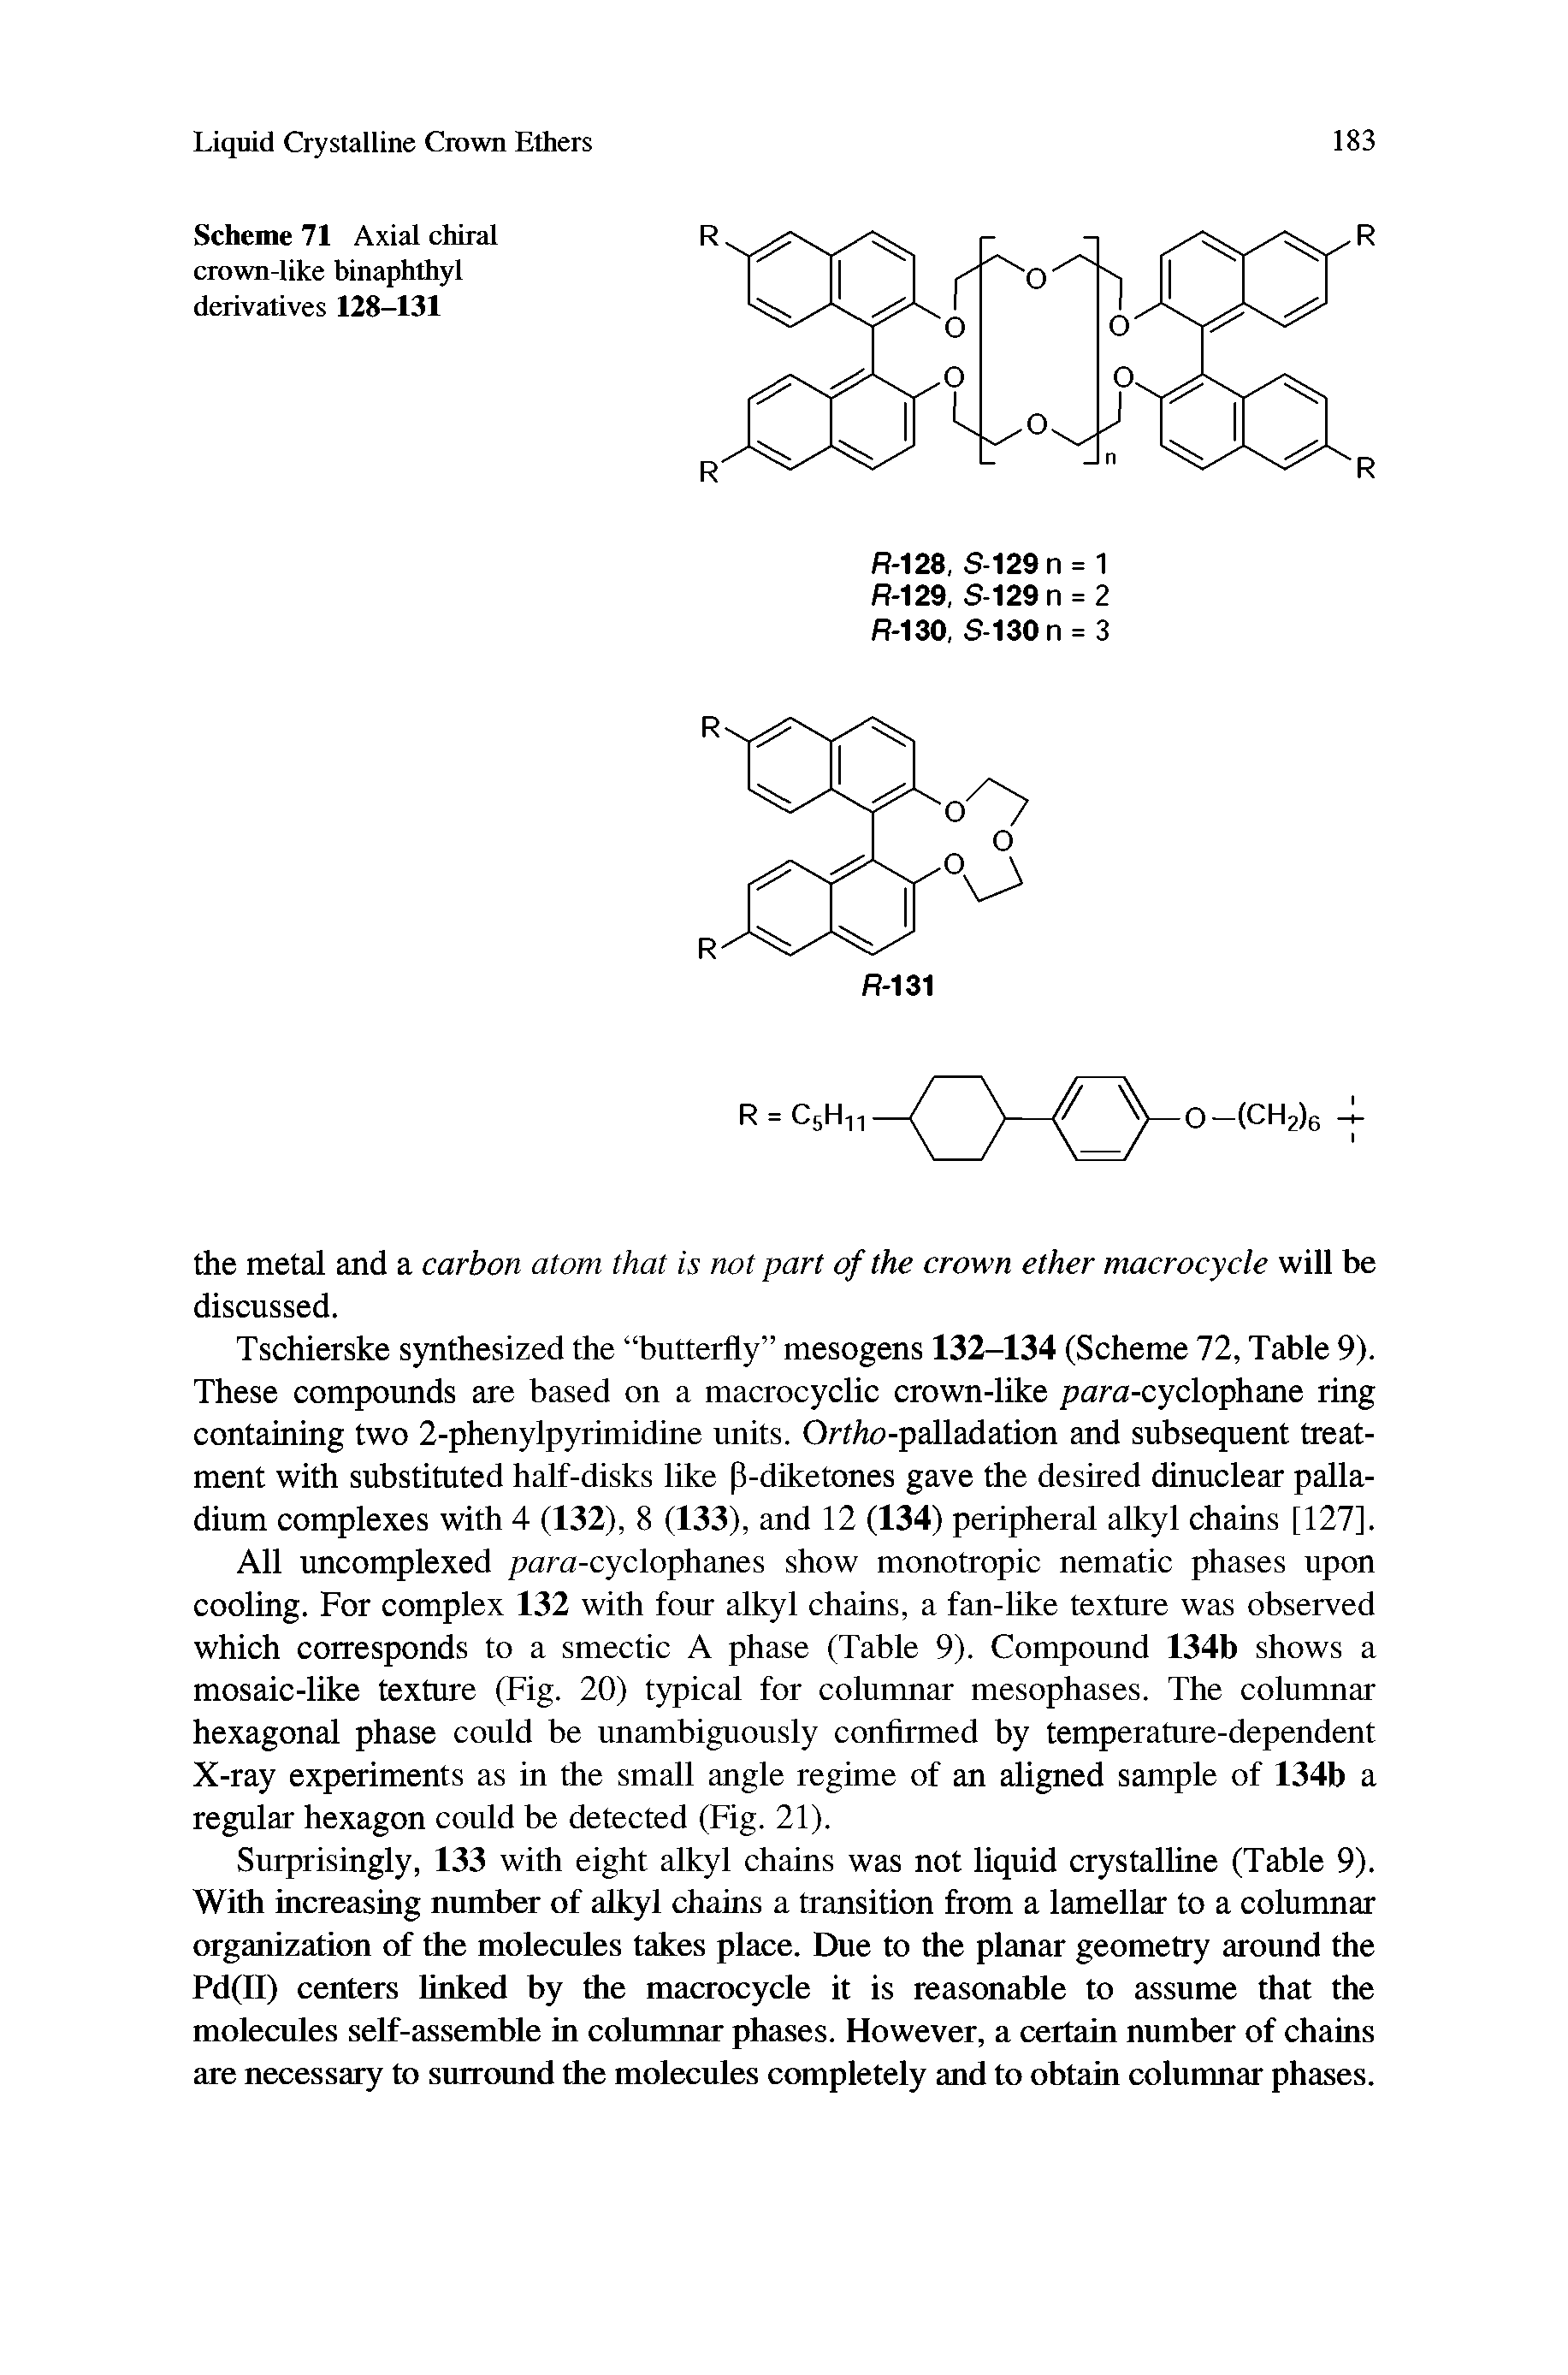 Scheme 71 Axial chiral crown-like binaphthyl derivatives 128-131...